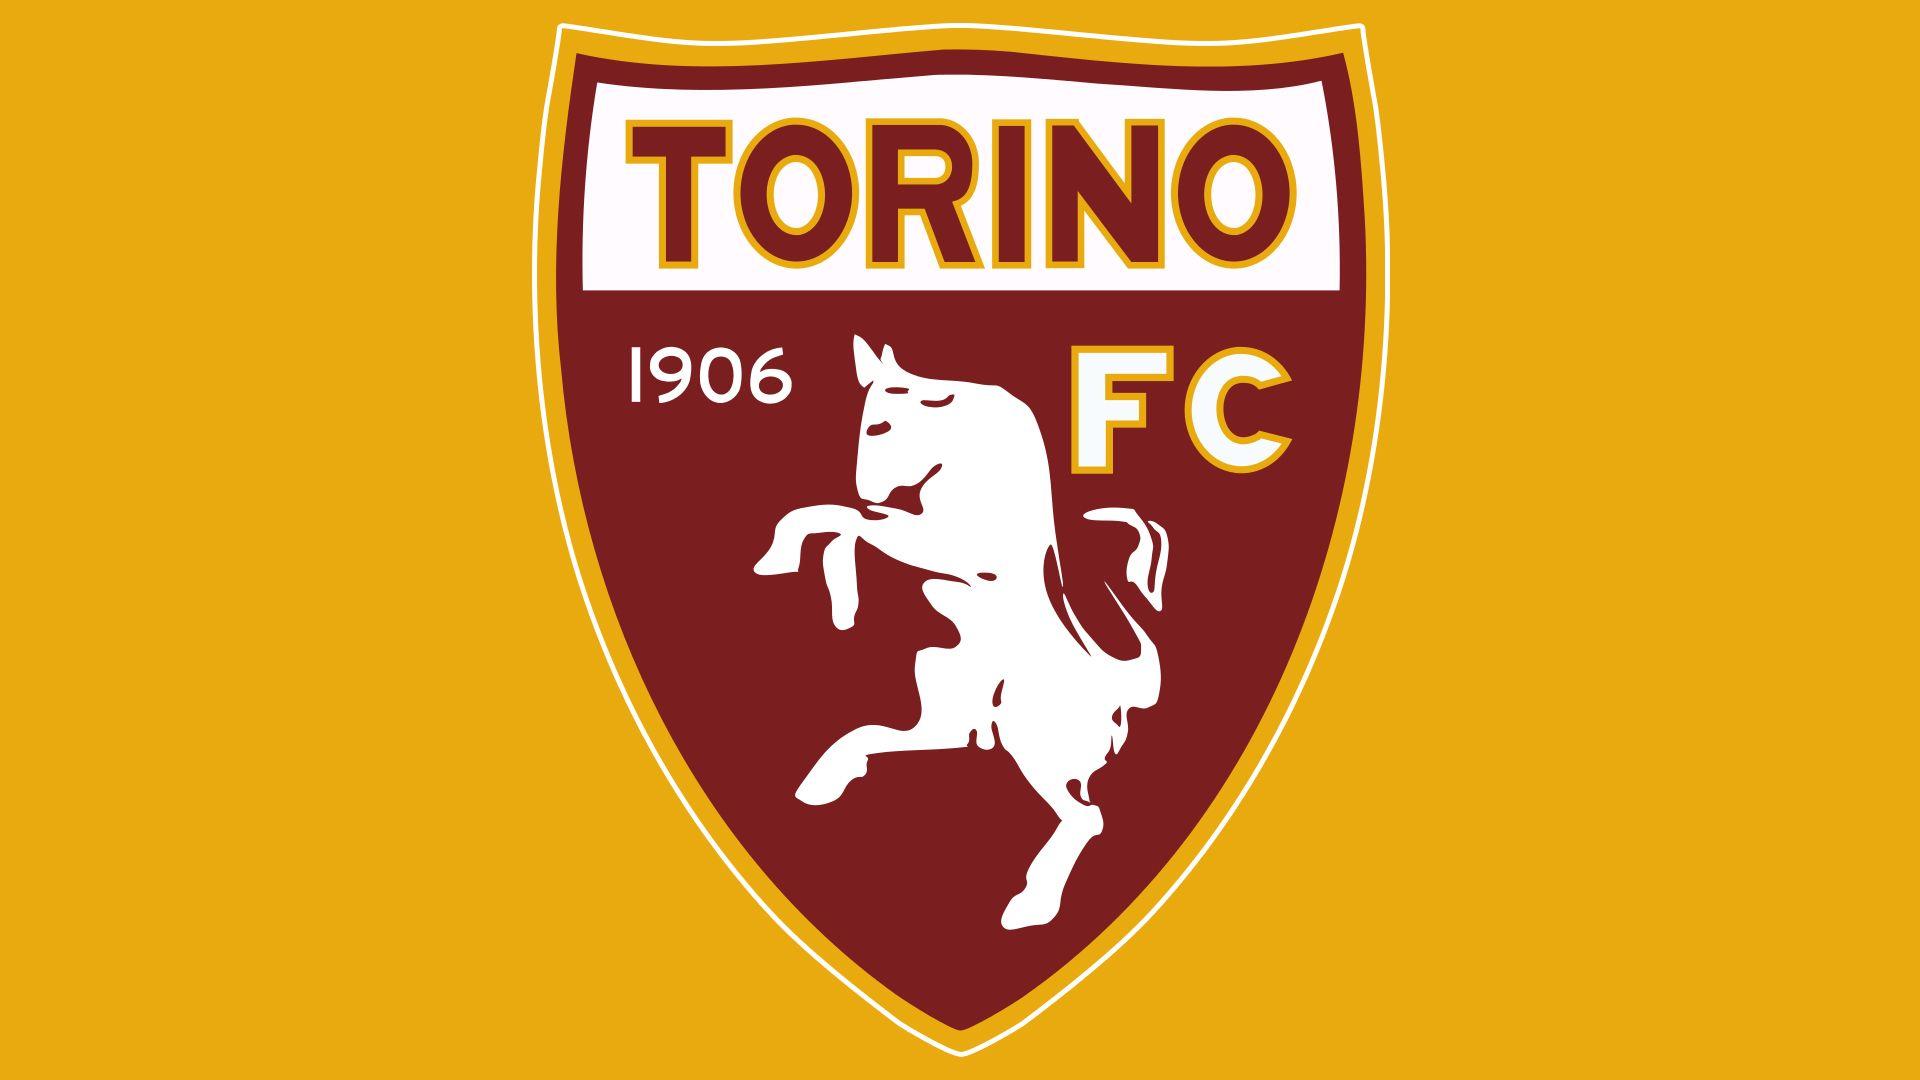 Torino Logo - Torino logo, Torino Symbol, Meaning, History and Evolution